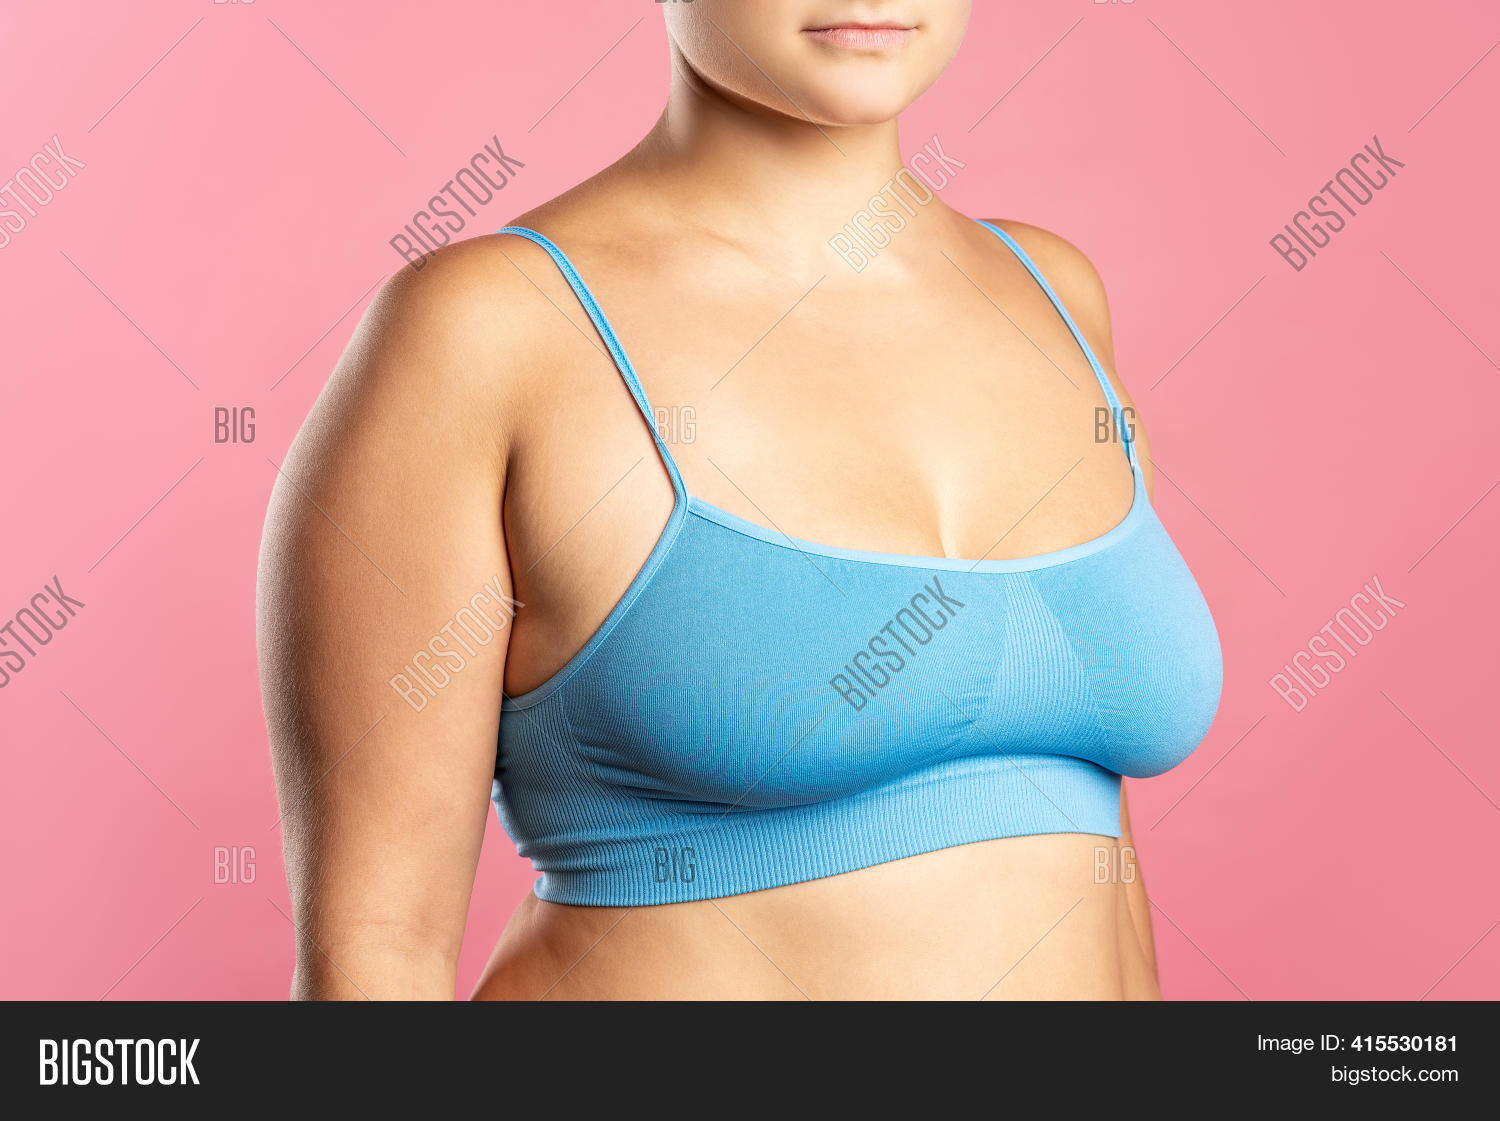 daniel yamane add free big natural breast photo